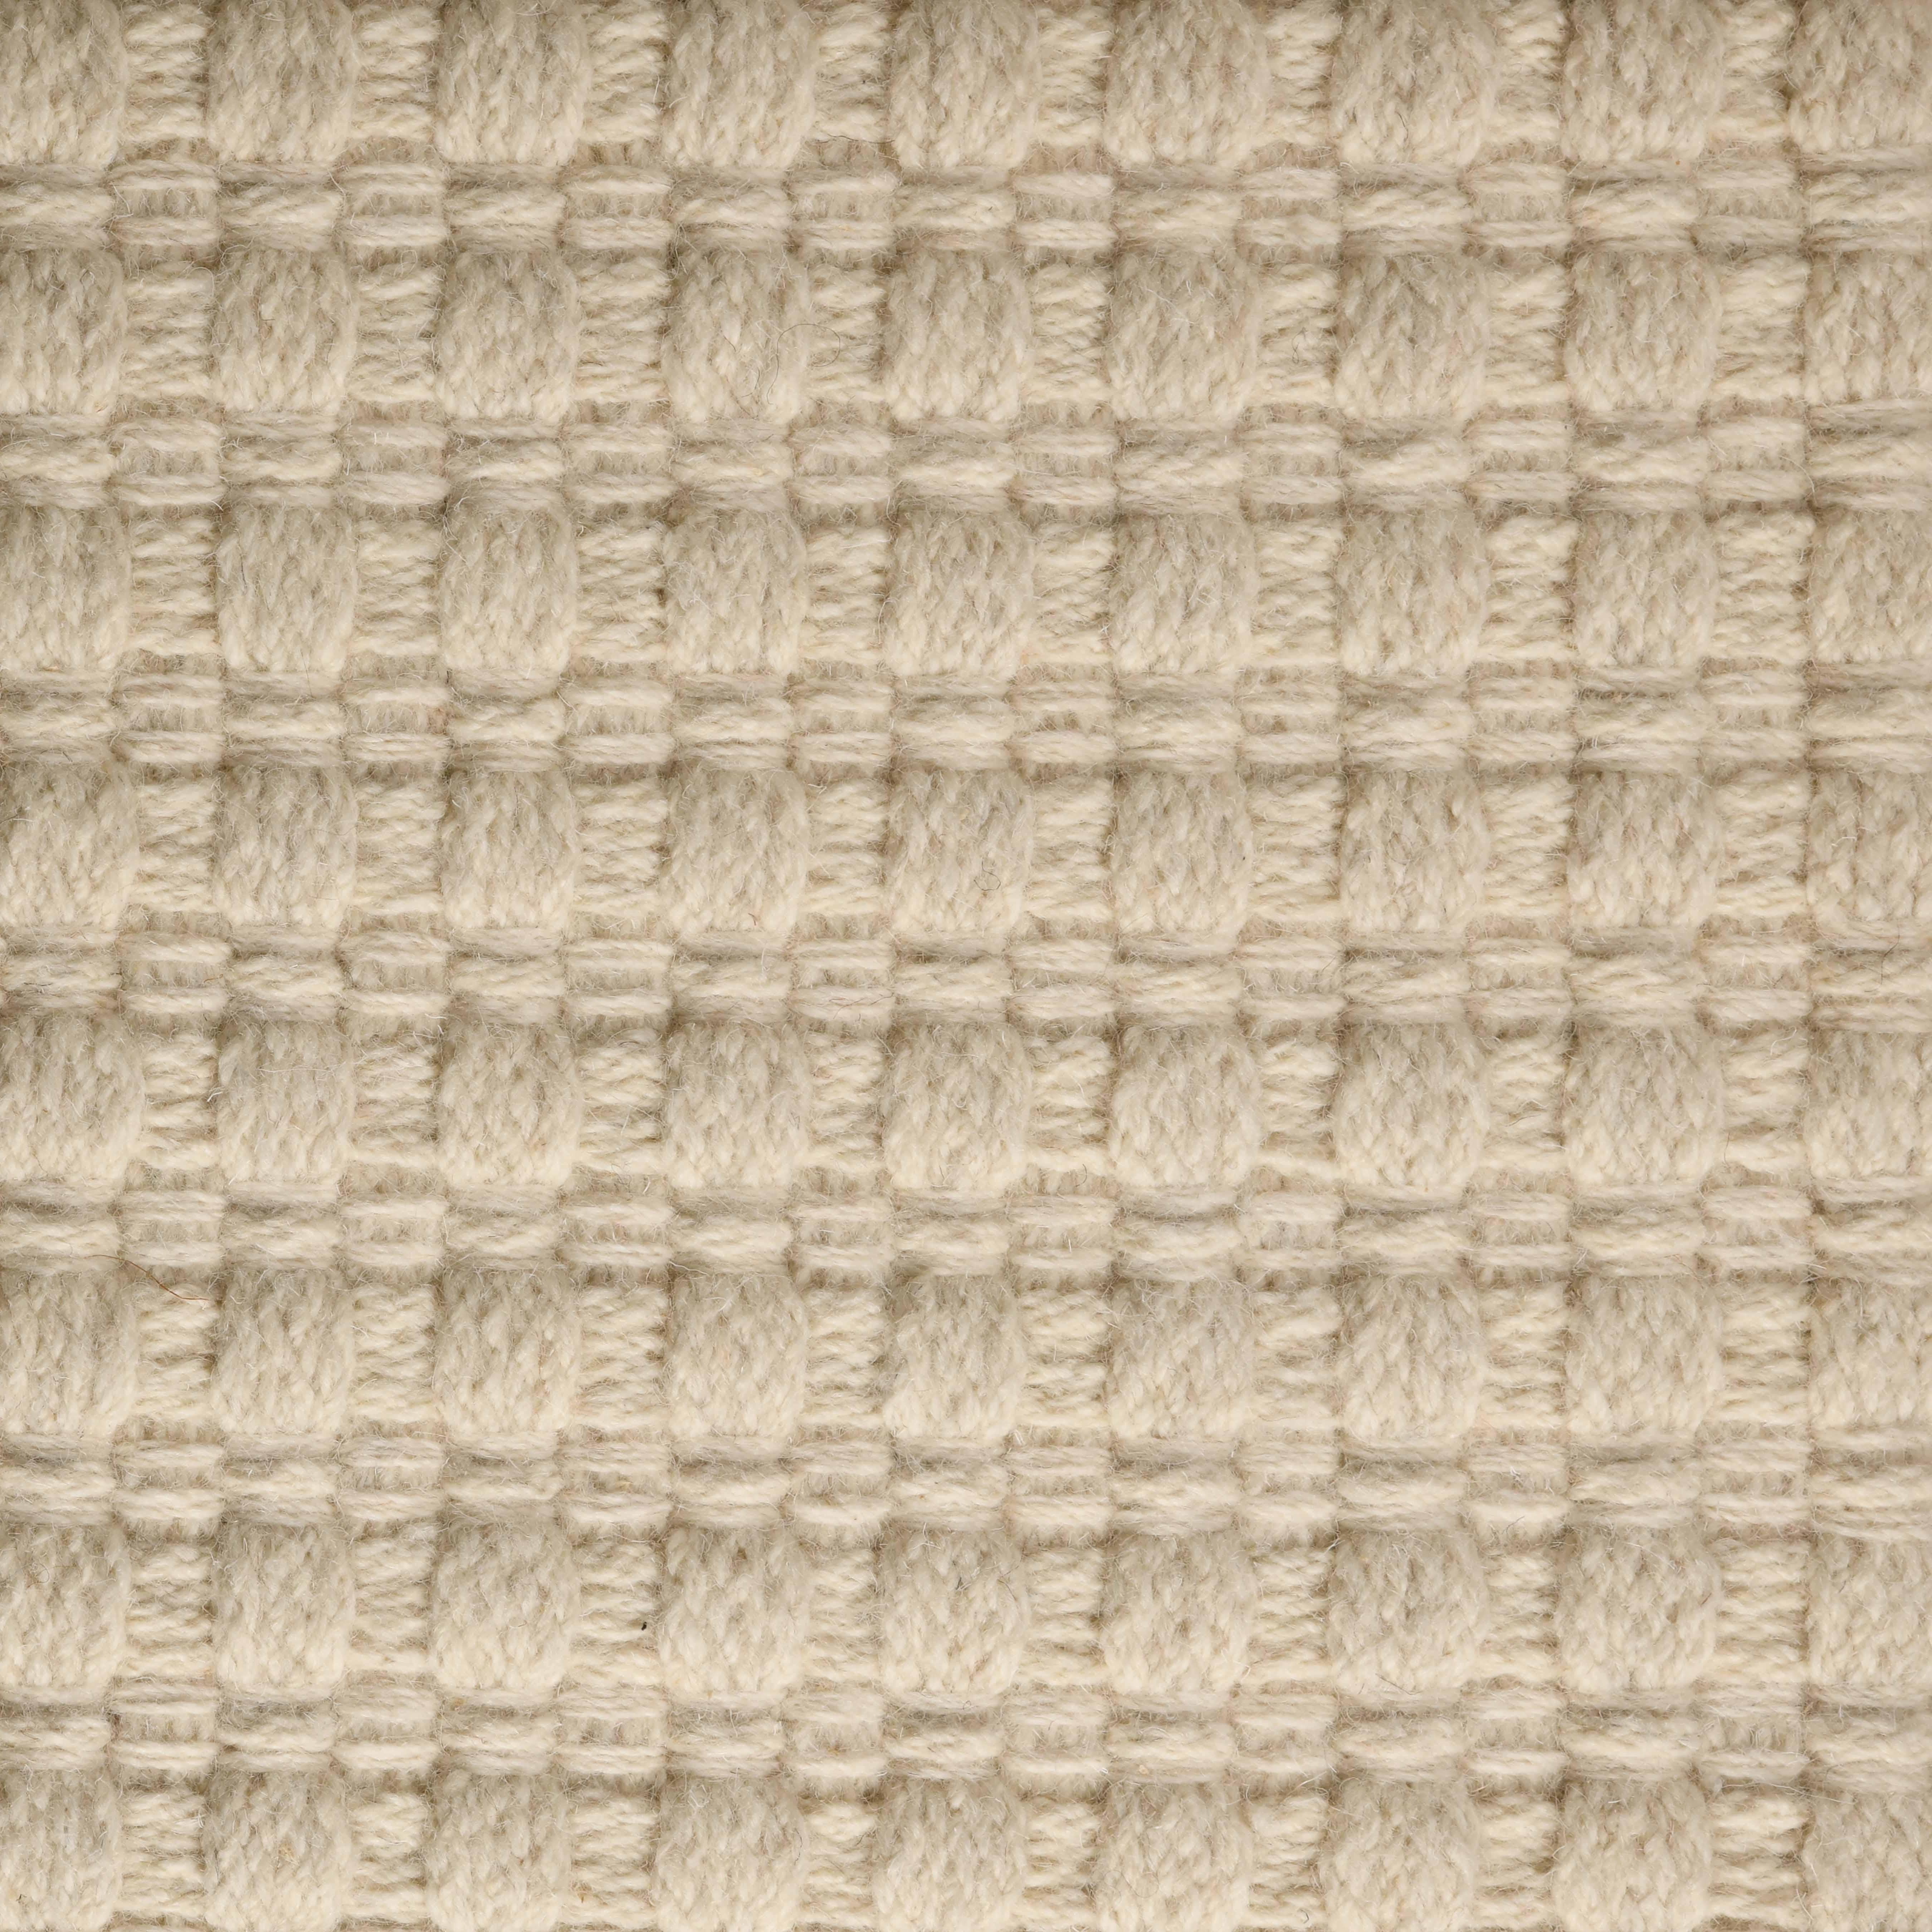 Una, Ecru, Handwoven Face 60% Undyed NZ Wool, 40% Undyed MED Wool, 8' x 10' For Sale